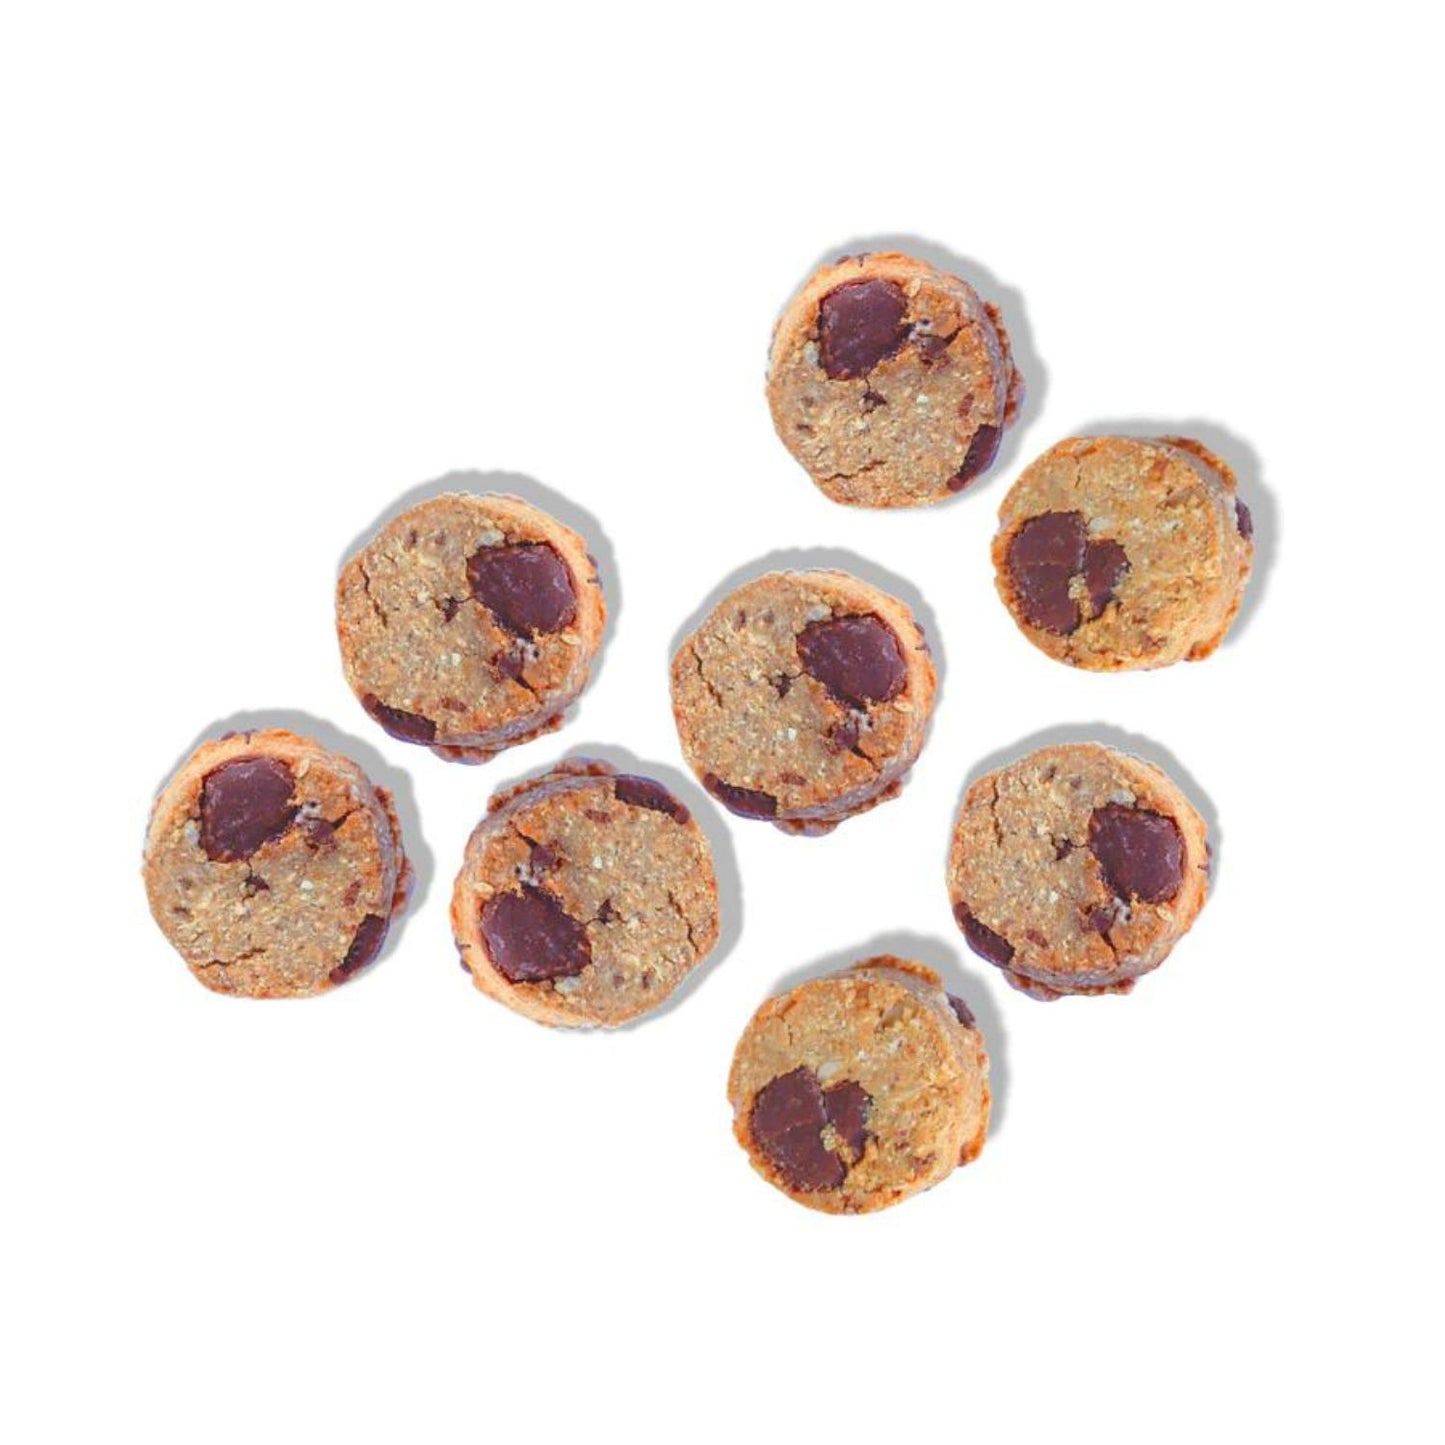 Carob Chip Dog Cookies